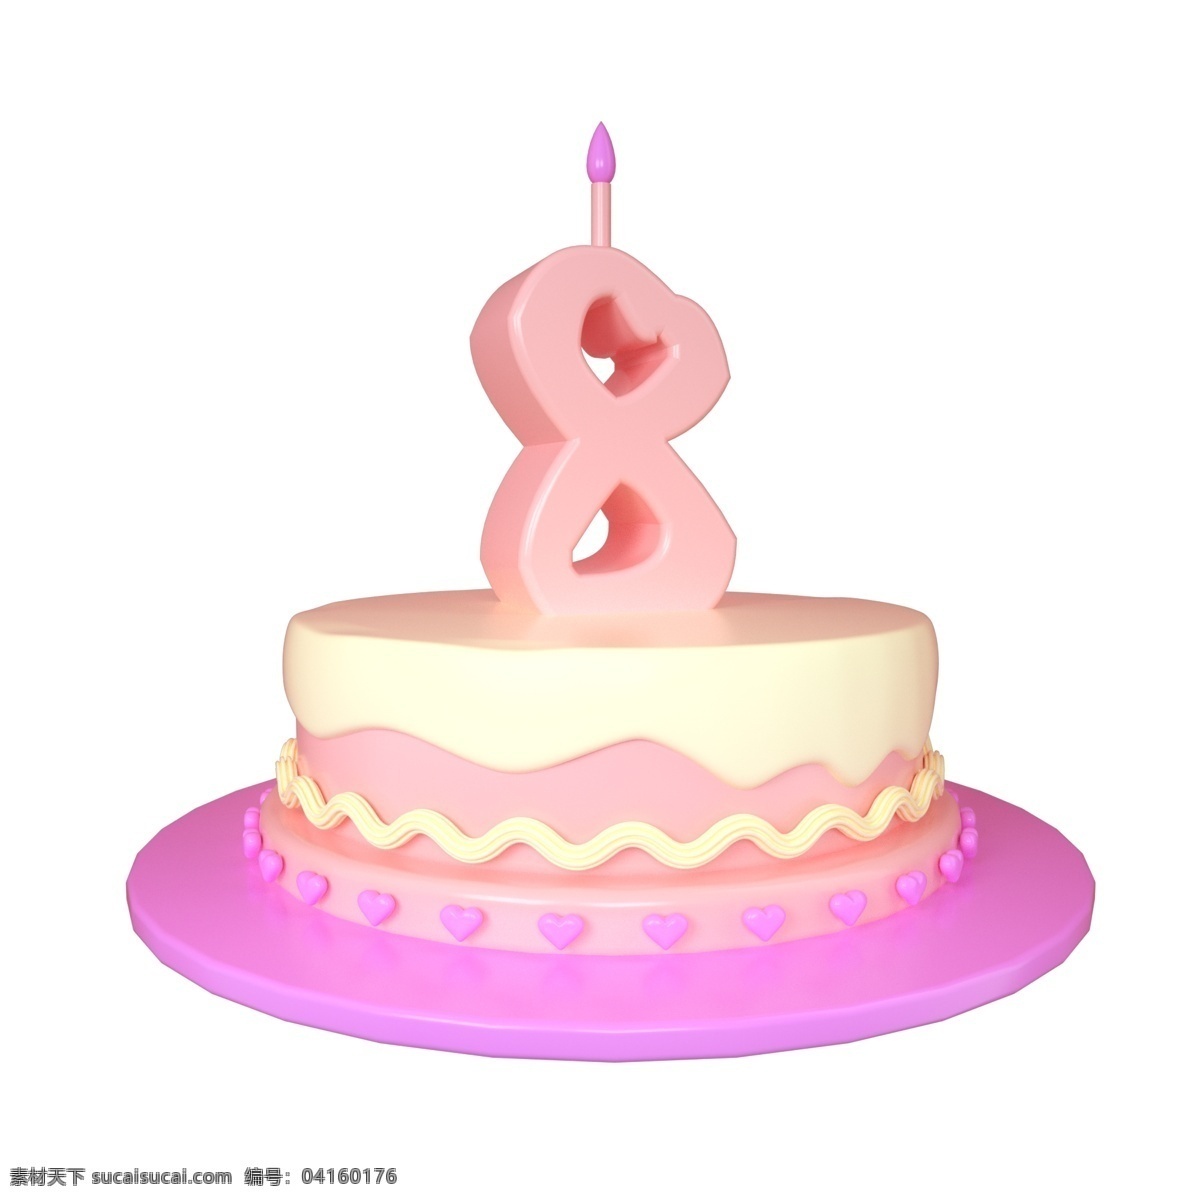 c4d 可爱 立体 周岁 生日蛋糕 装饰 3d 8周岁 粉色 奶黄色 紫色 爱心 庆祝生日 蜡烛